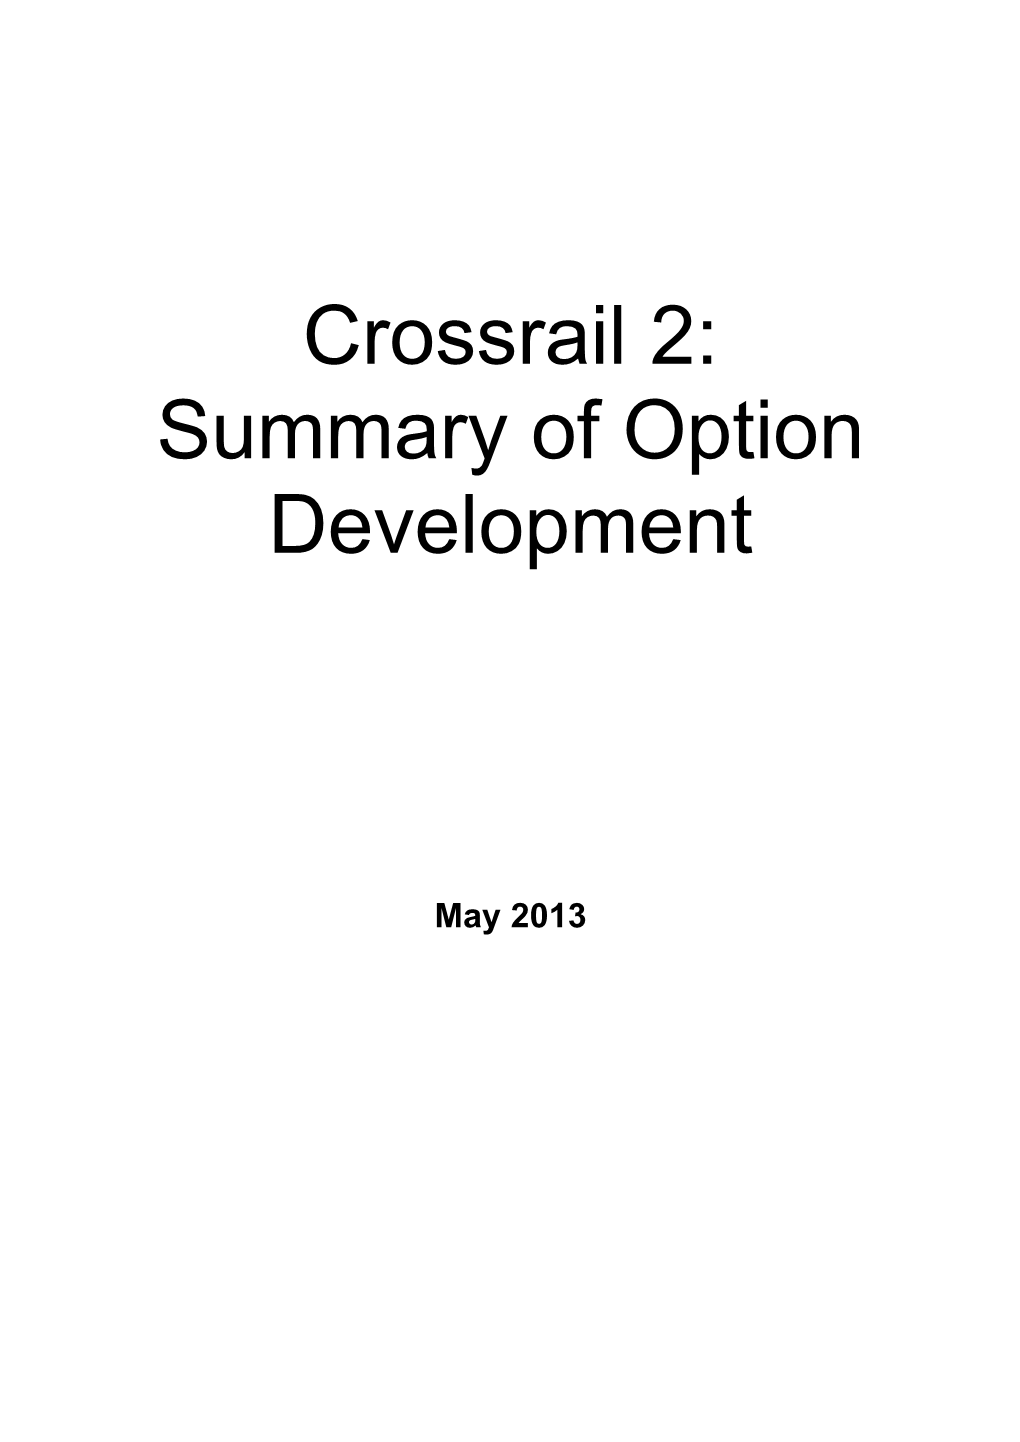 Crossrail 2 Summary of Option Development